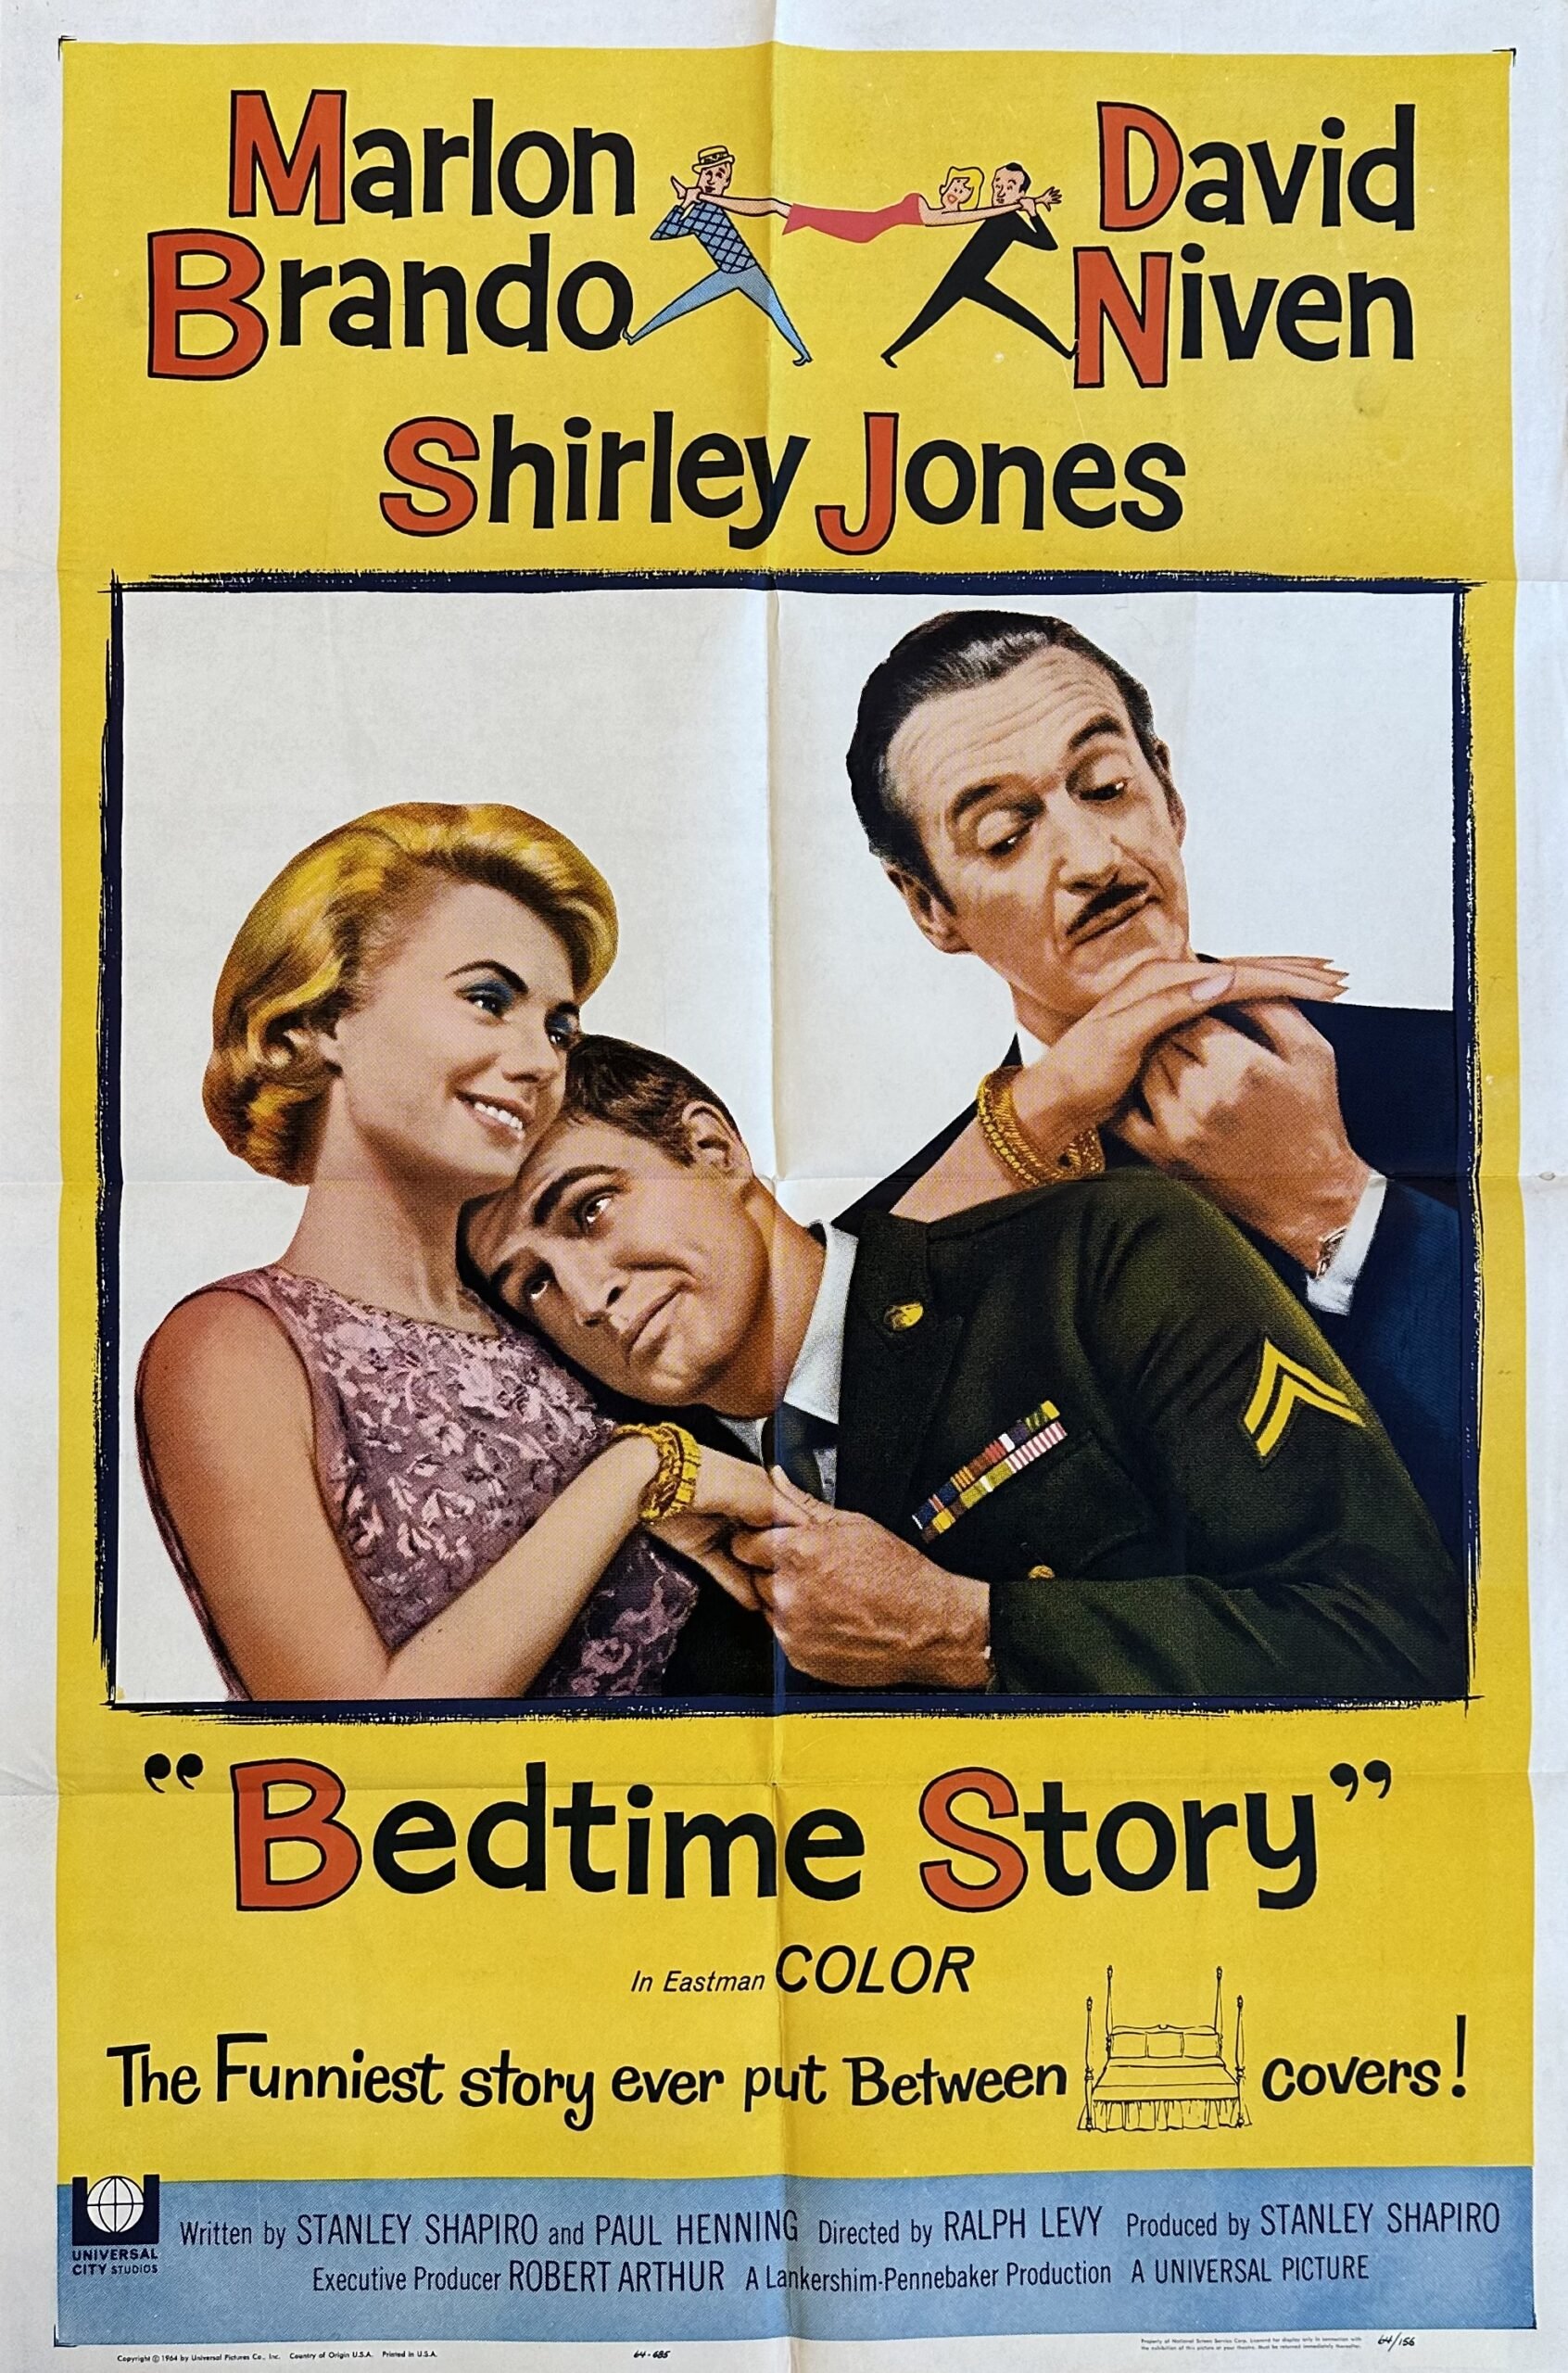 Original vintage cinema poster for the comedy, Bedtime Story